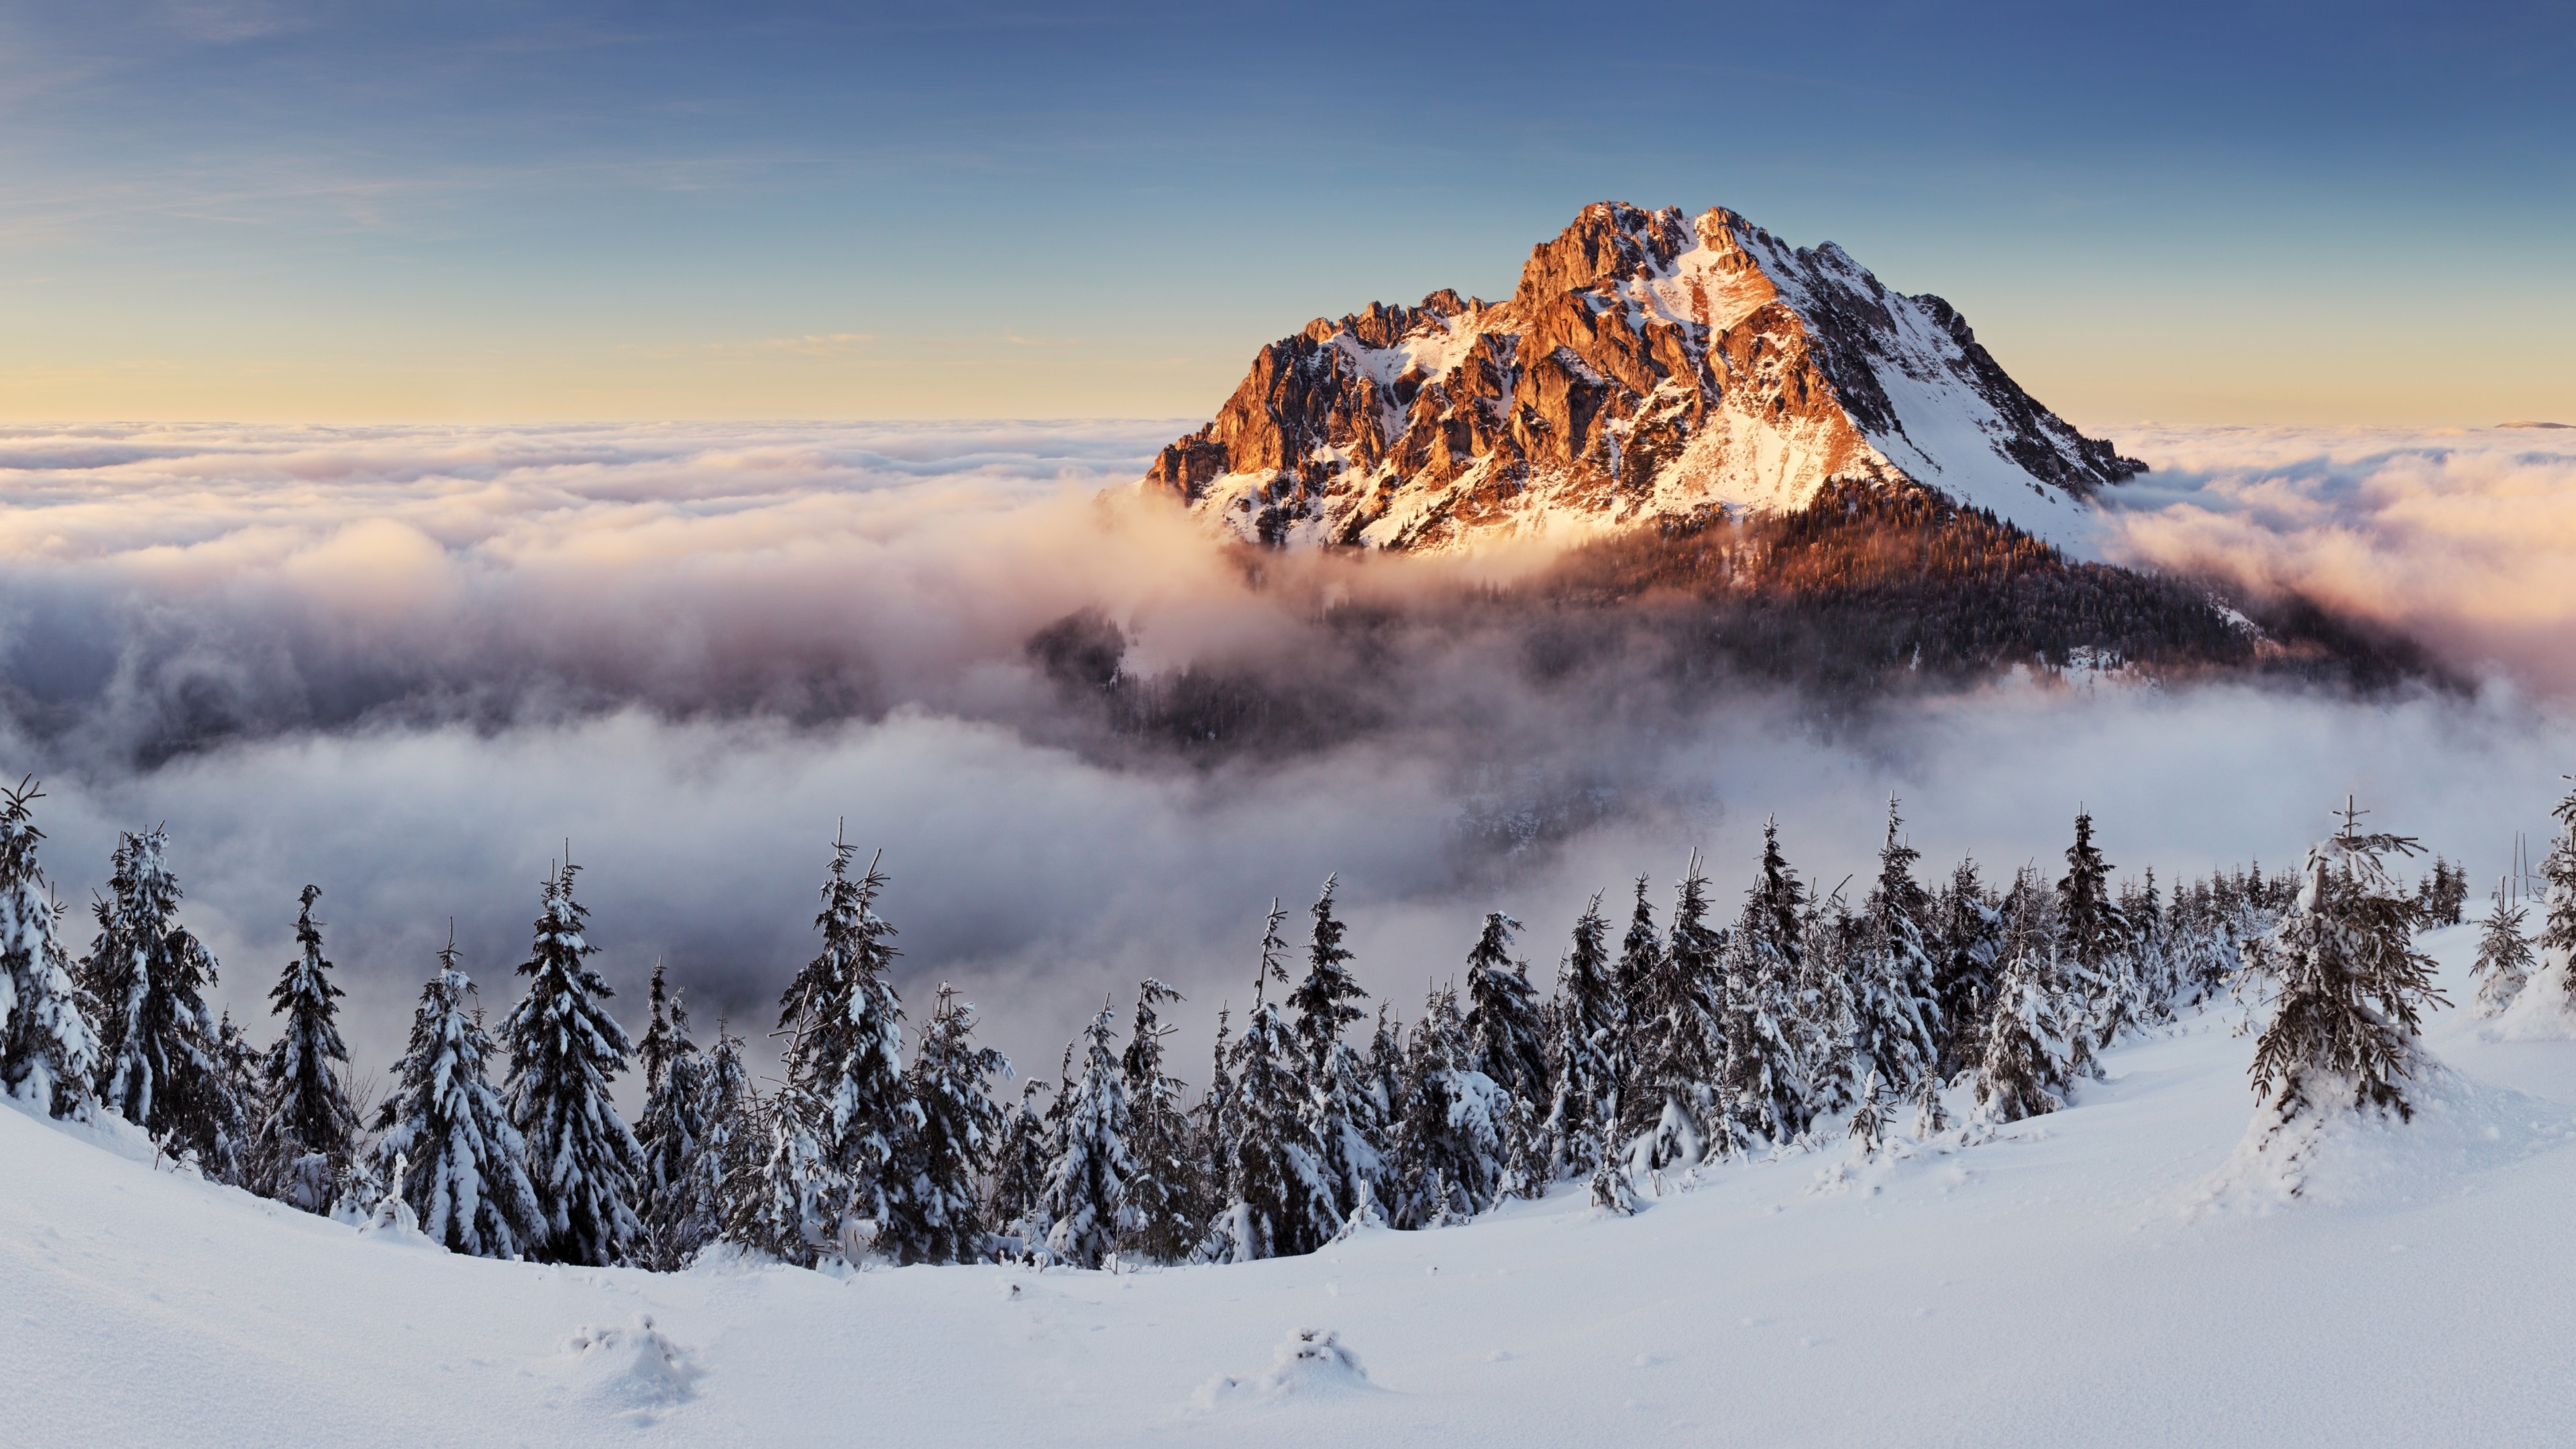 Snowy Slovakia, 4k mountain wallpaper, Mist and pines, Winter wonderland, 3840x2160 4K Desktop